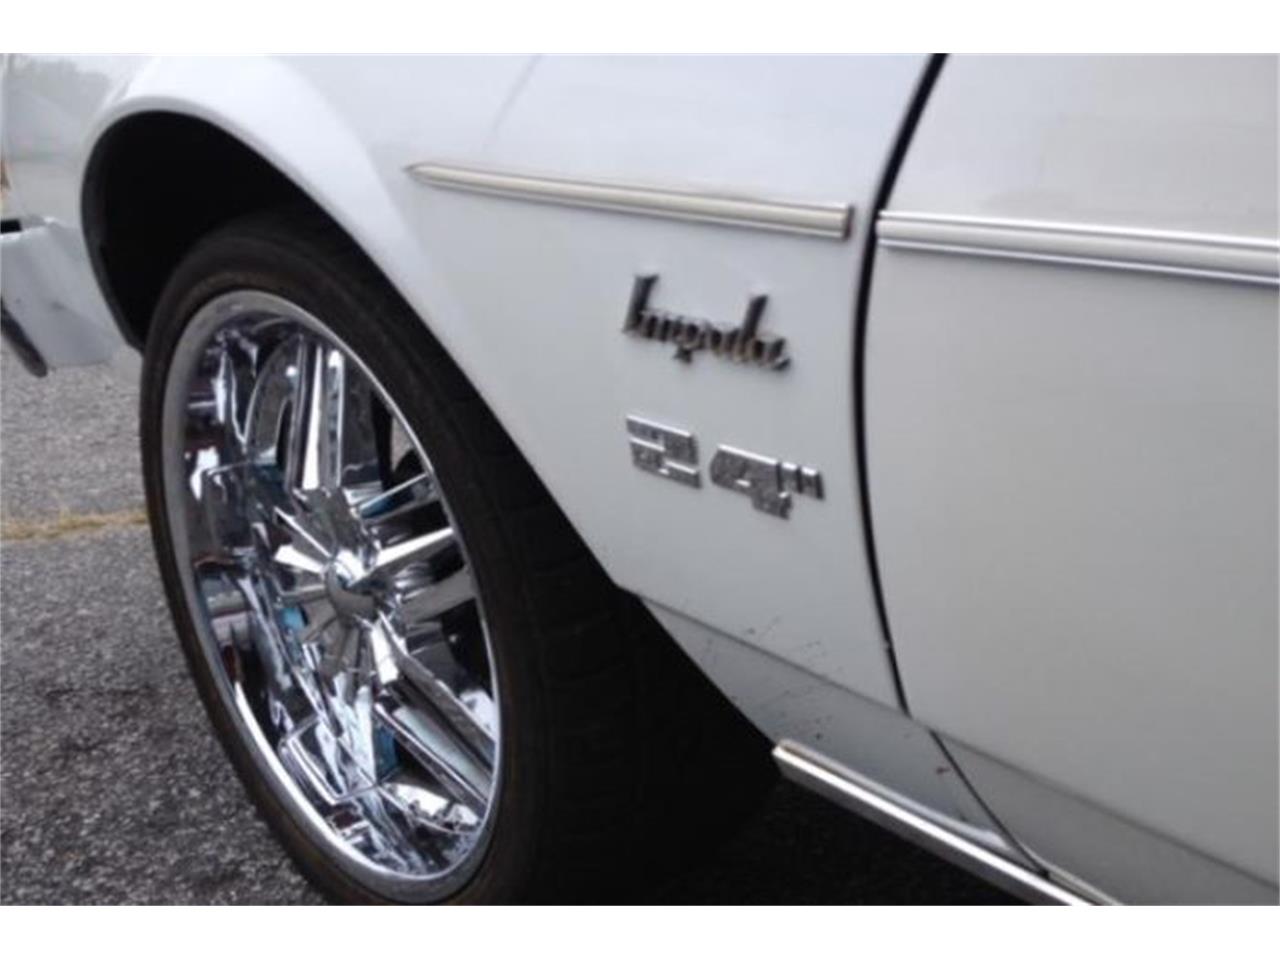 1979 chevrolet impala for sale in cadillac michigan